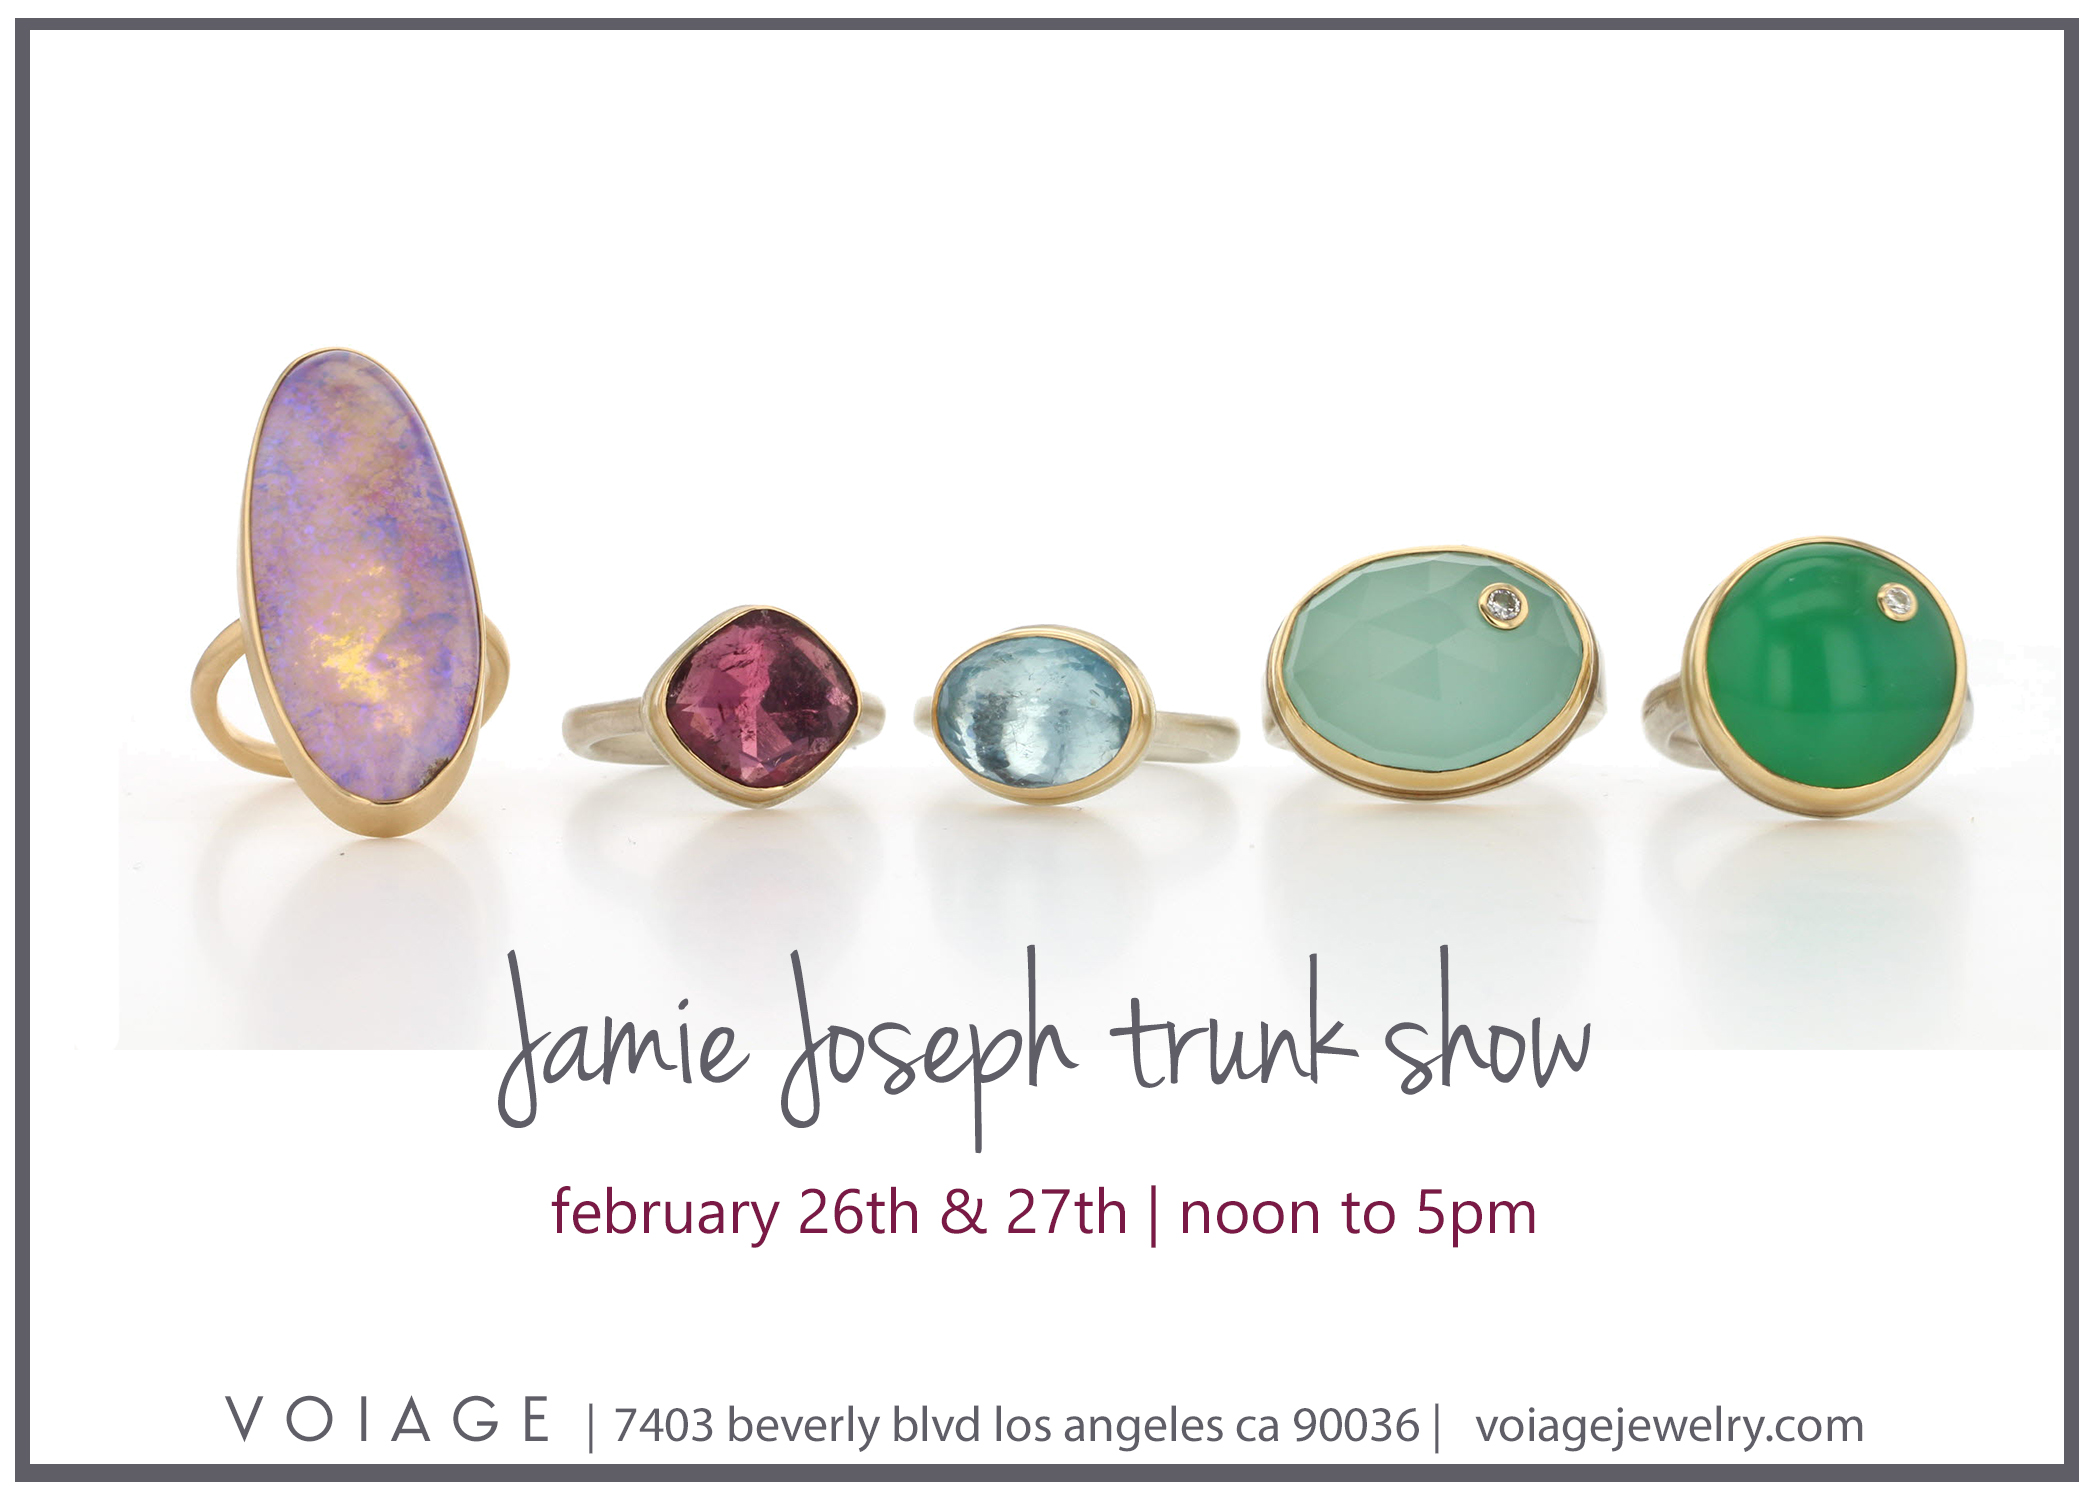 Jamie Joseph Jewelry Event at Voiage Los Angeles